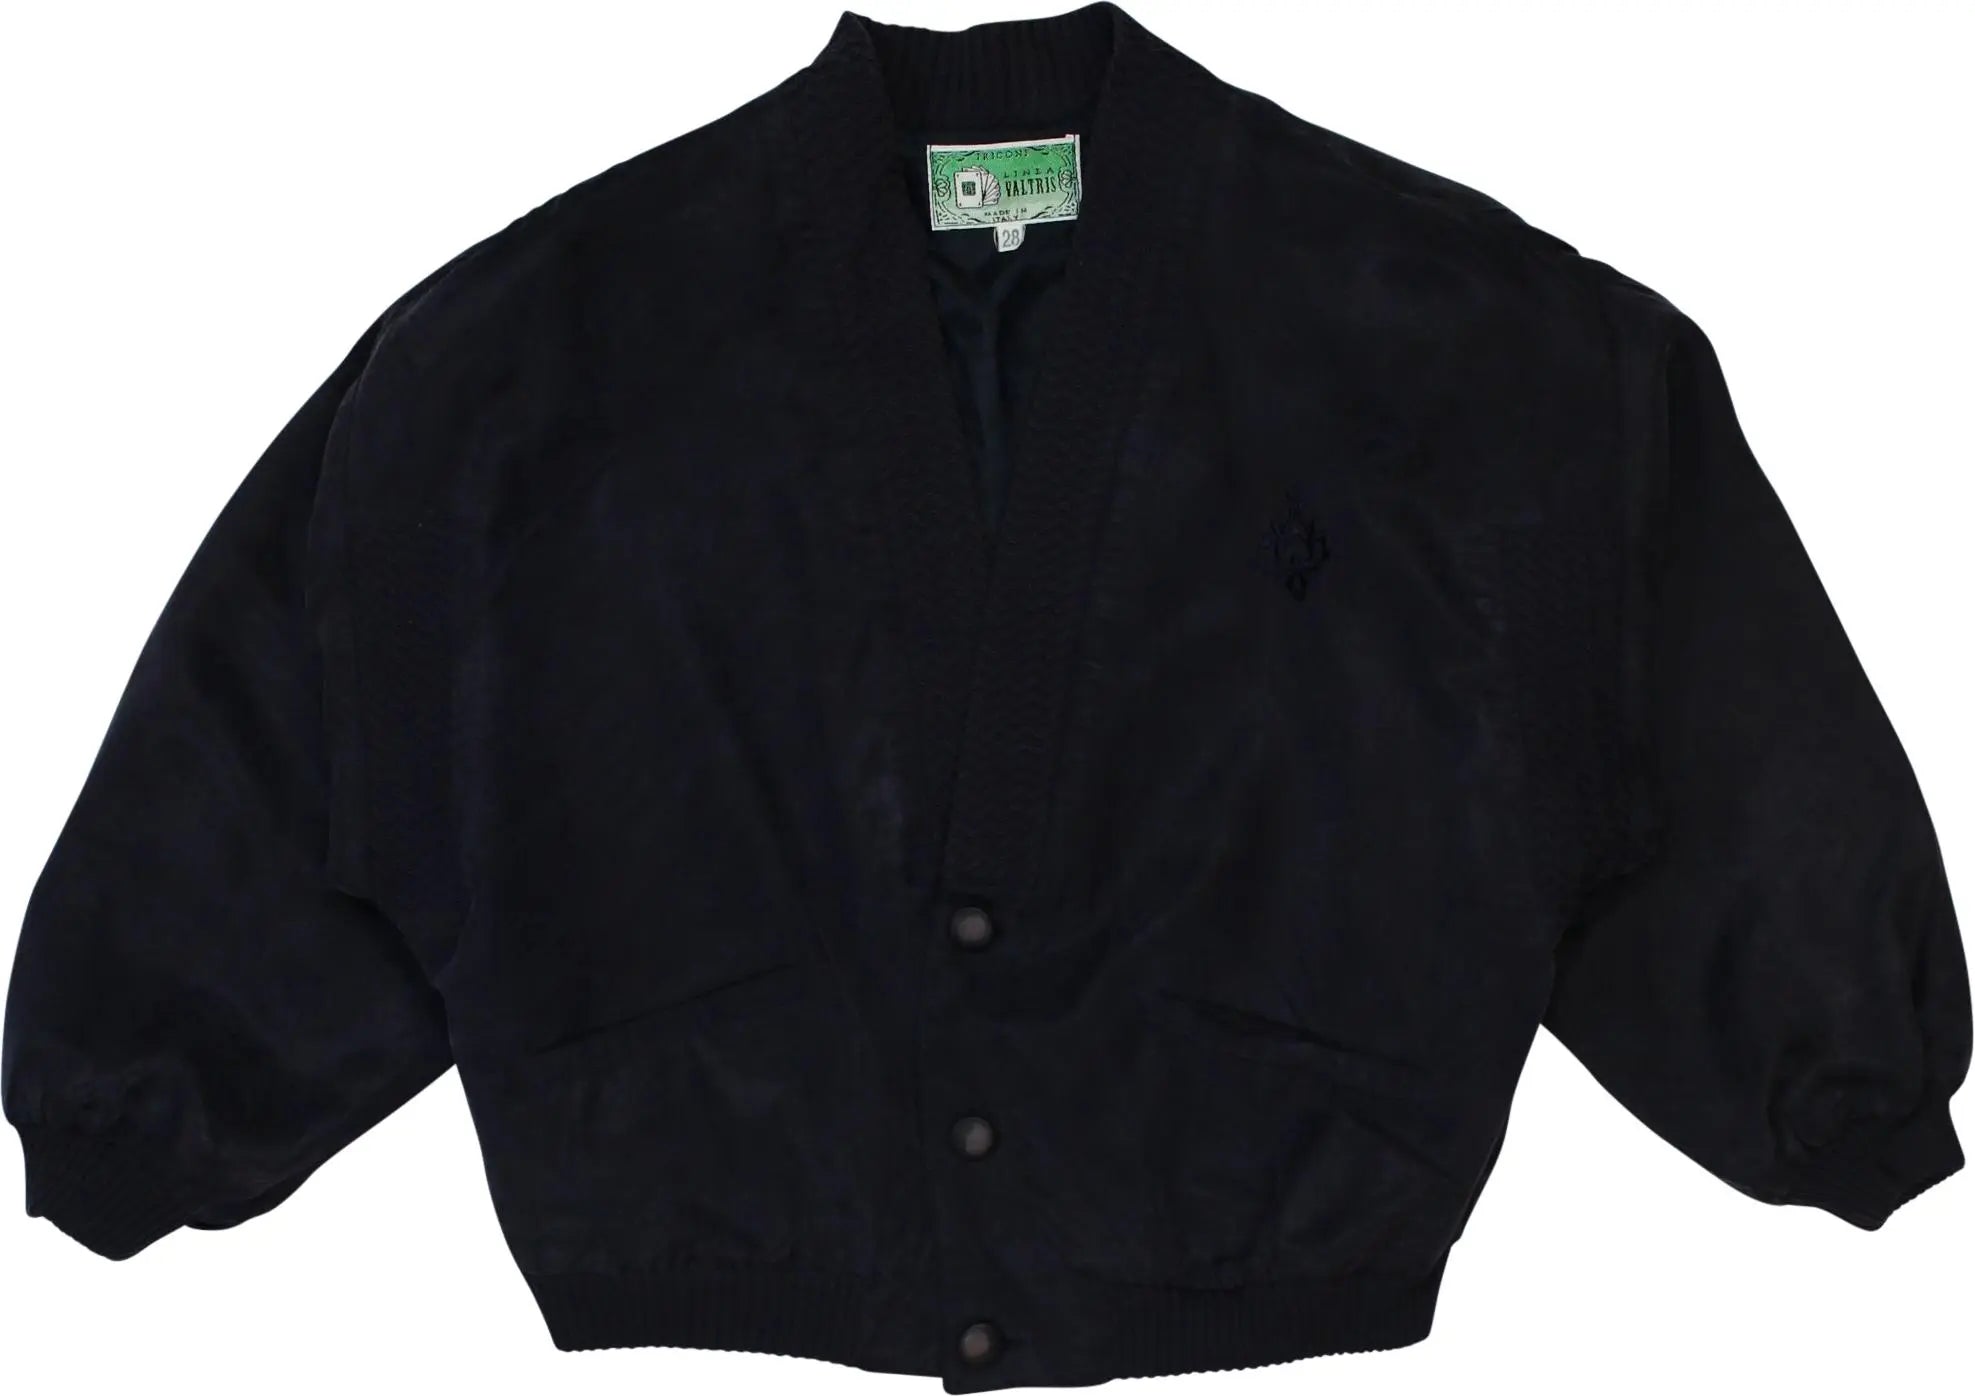 Linea Valtris - Blue Jacket With Shoulderpads- ThriftTale.com - Vintage and second handclothing